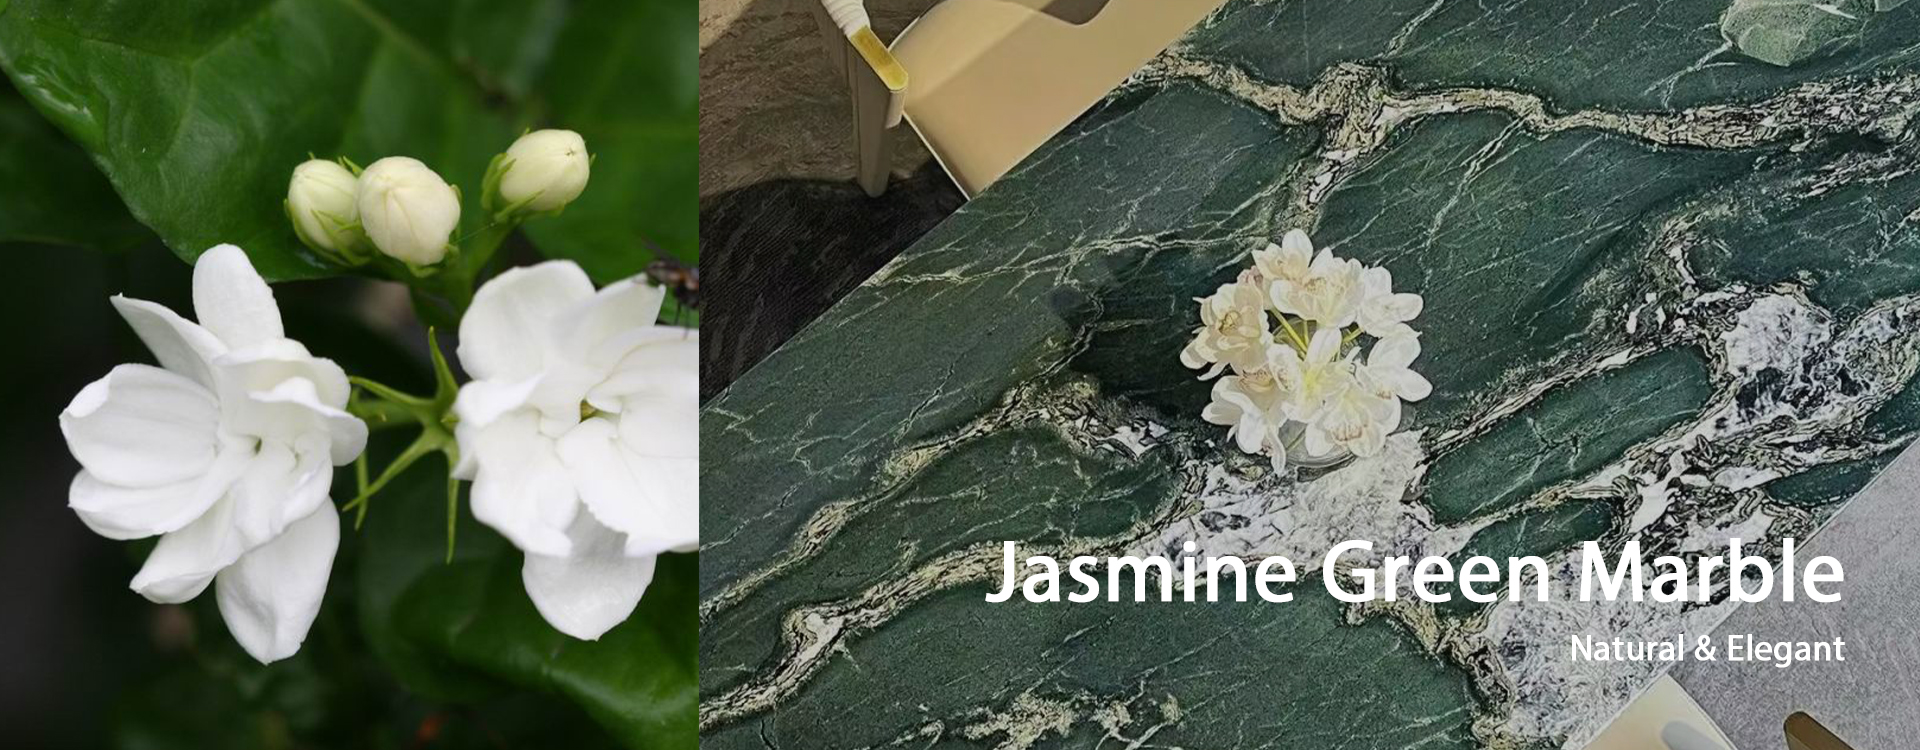 jasminegreen